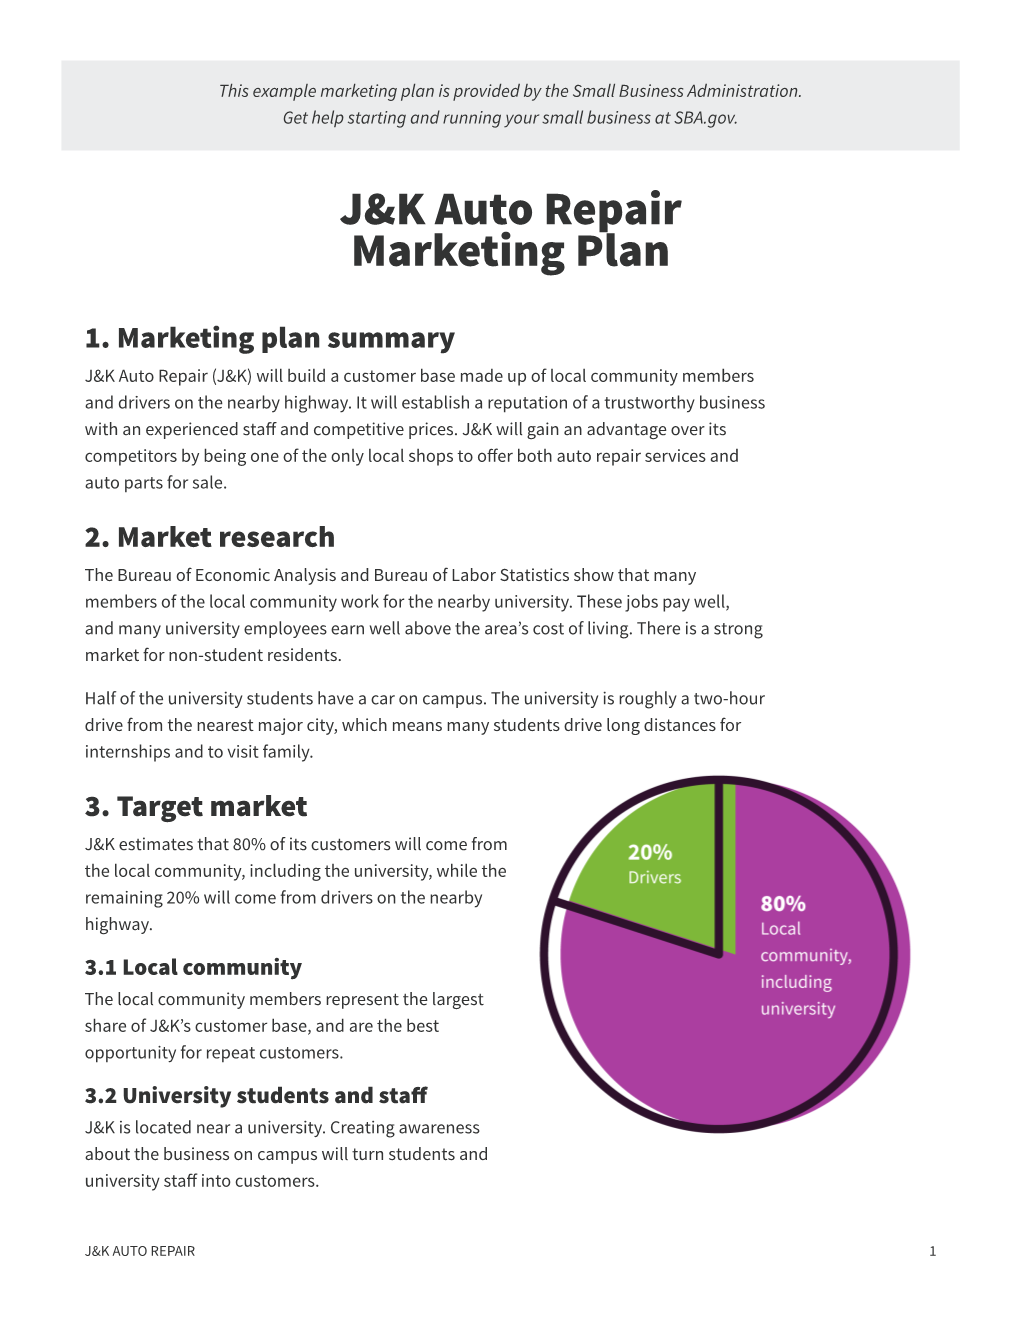 J&K Auto Repair Marketing Plan